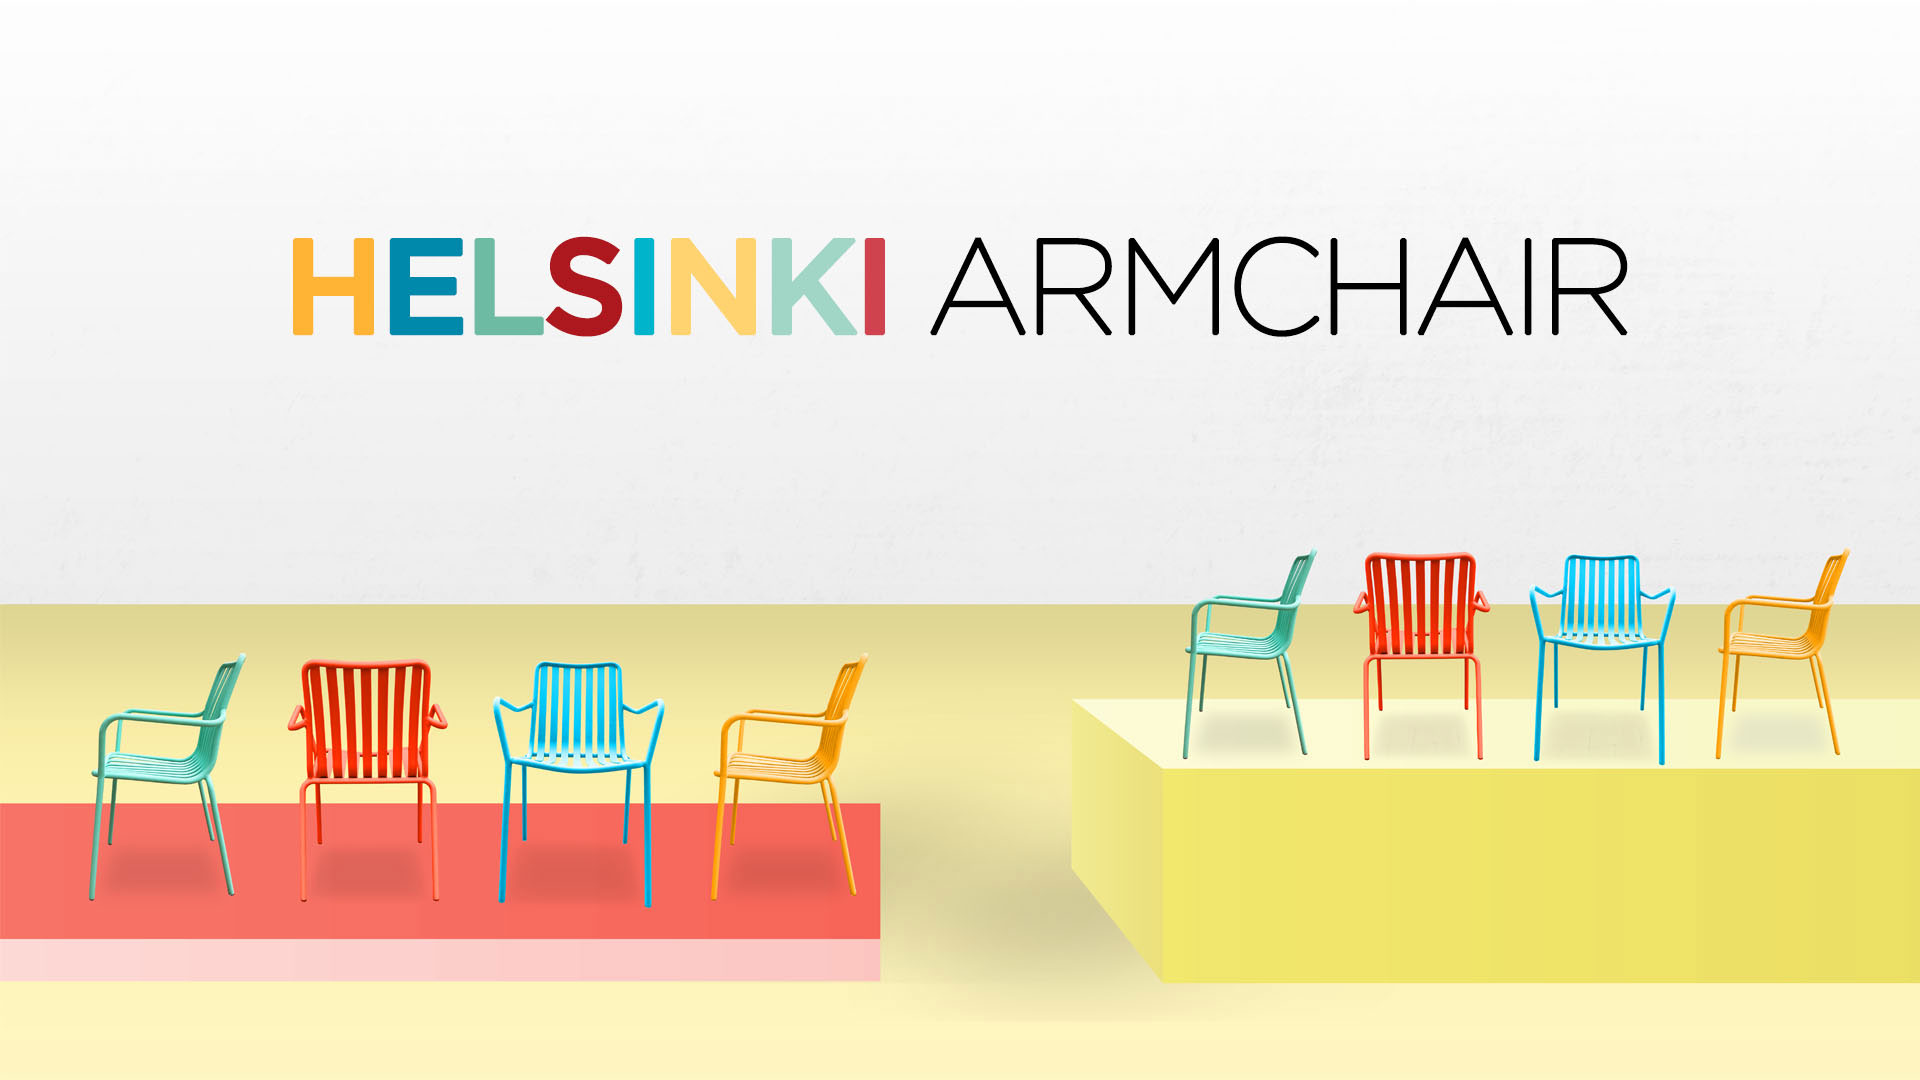 Helsinki Armchair